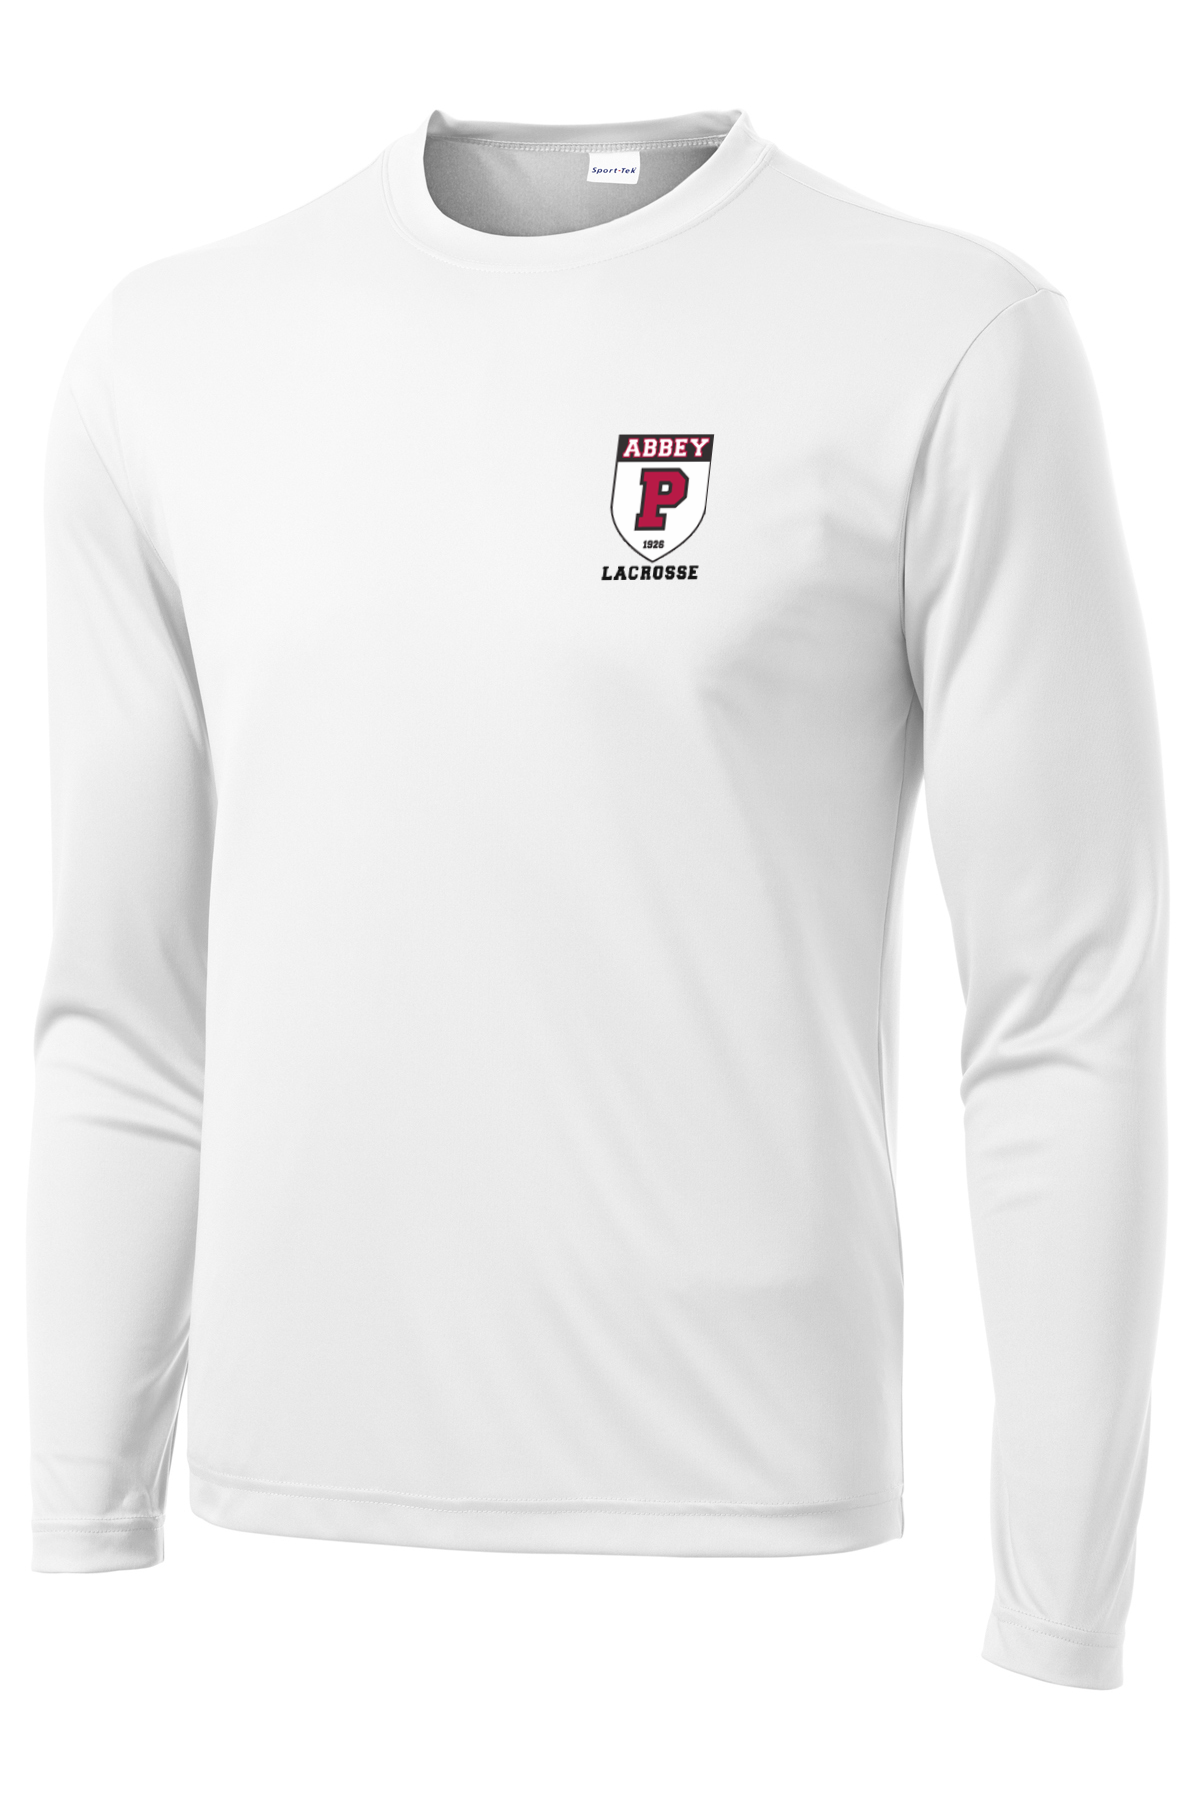 Portsmouth Lacrosse White Long Sleeve Performance Shirt